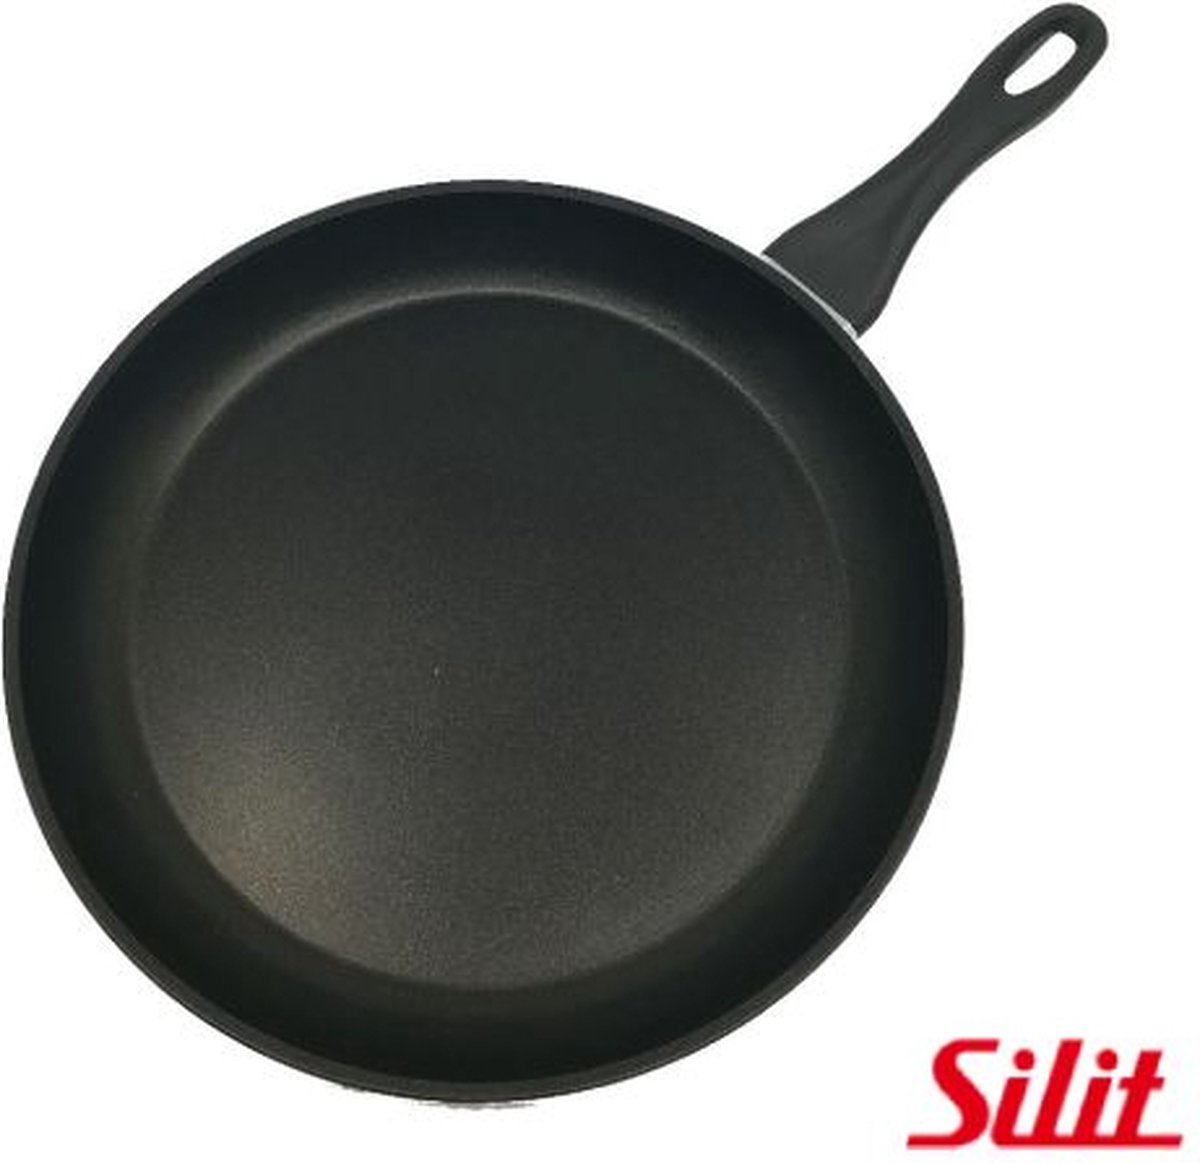 Silit - Senso koekenpan 32cm - Zwart | bol.com